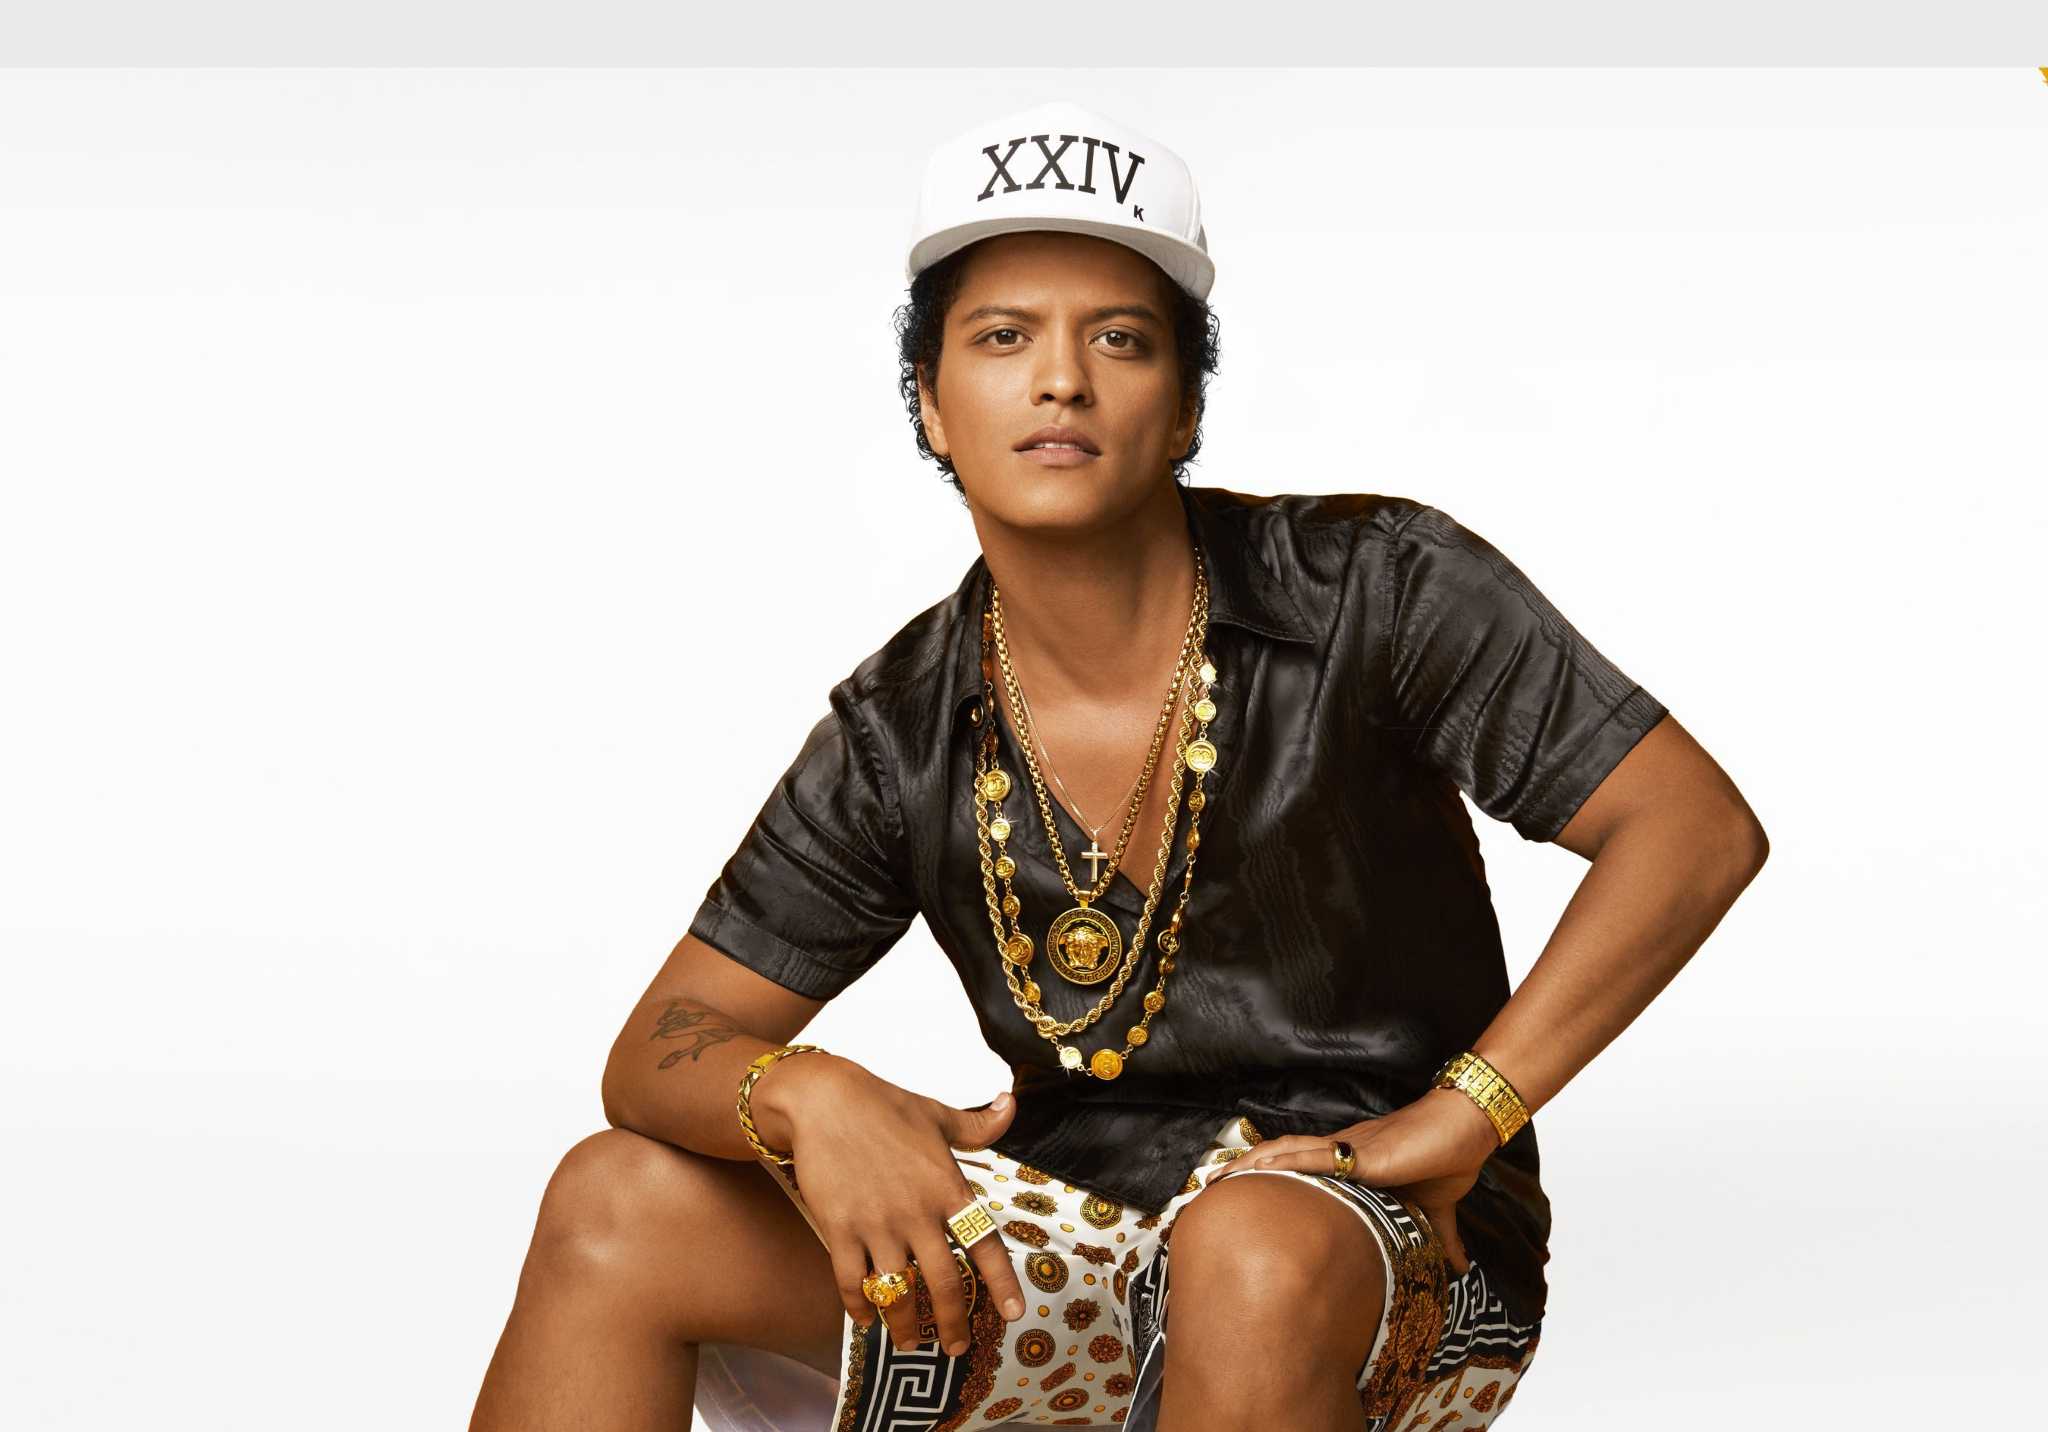 Bruno Mars headlines another Super Bowl week concert - Houston ... - Chron.com